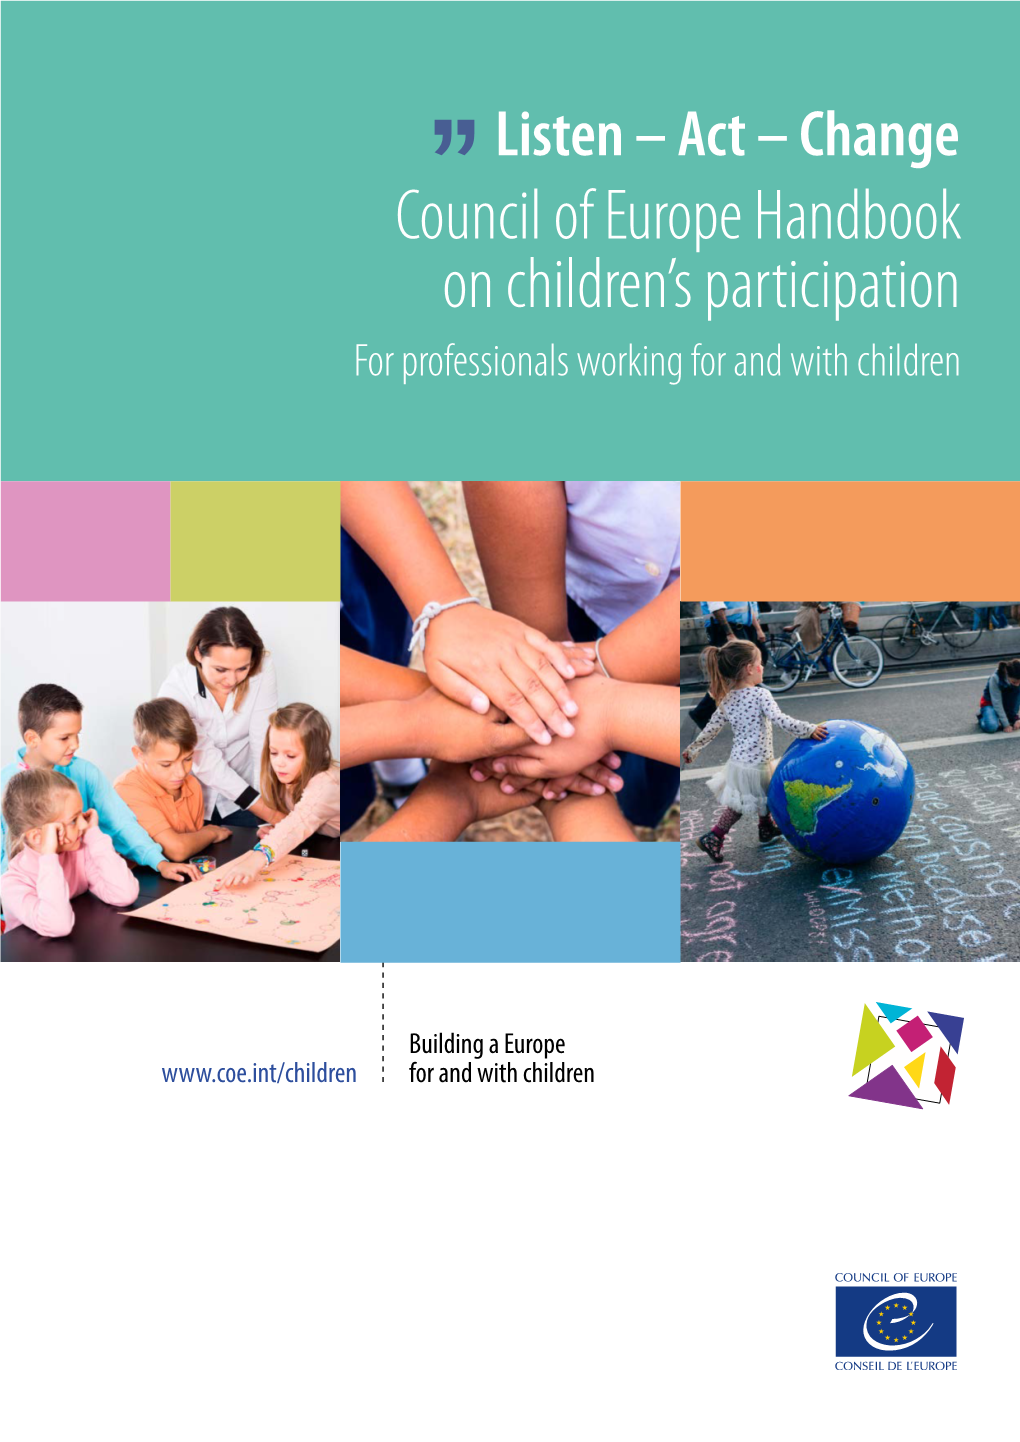 Council of Europe Handbook on Children's Participation